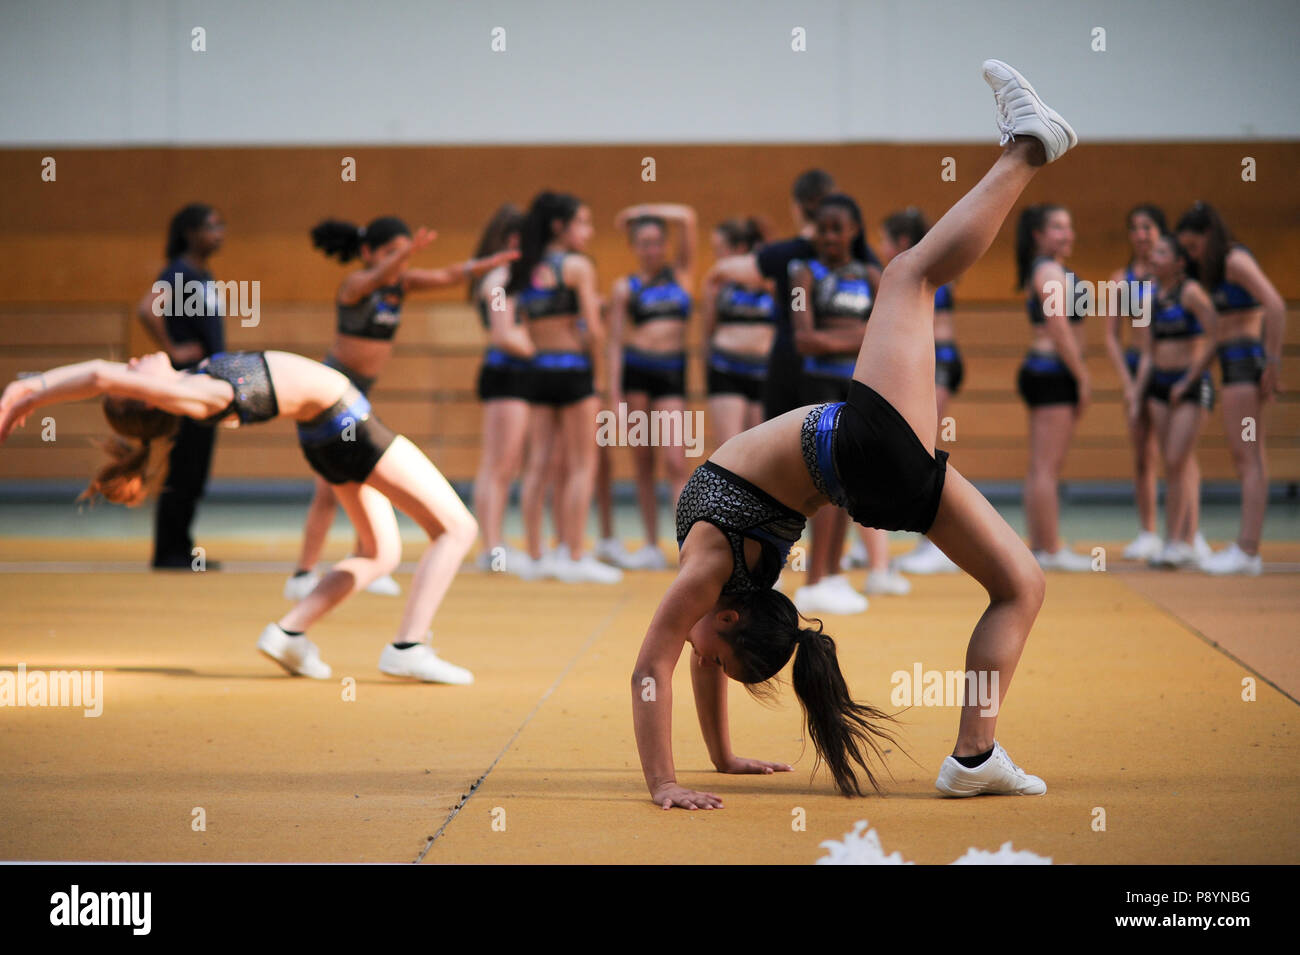 Young teenager cheerleaders dancing, acrobacy, acrobatic moves cheerleaders in blue in the air Stock Photo